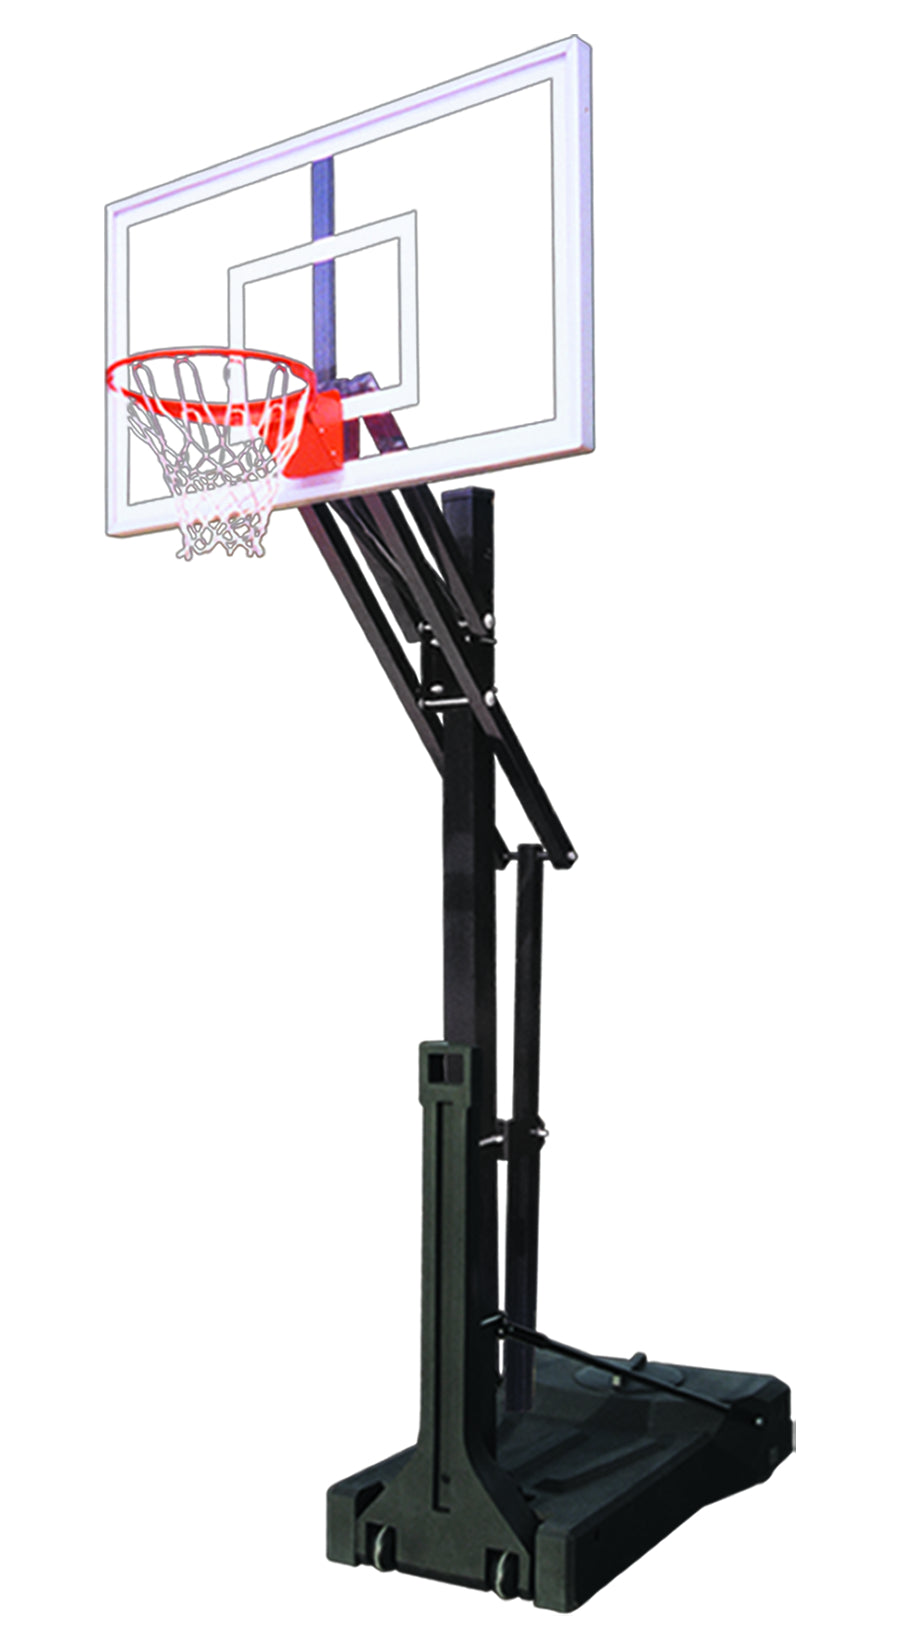 First Team OmniSlam Nitro Portable Basketball Goal - 36"x60" Tempered Glass